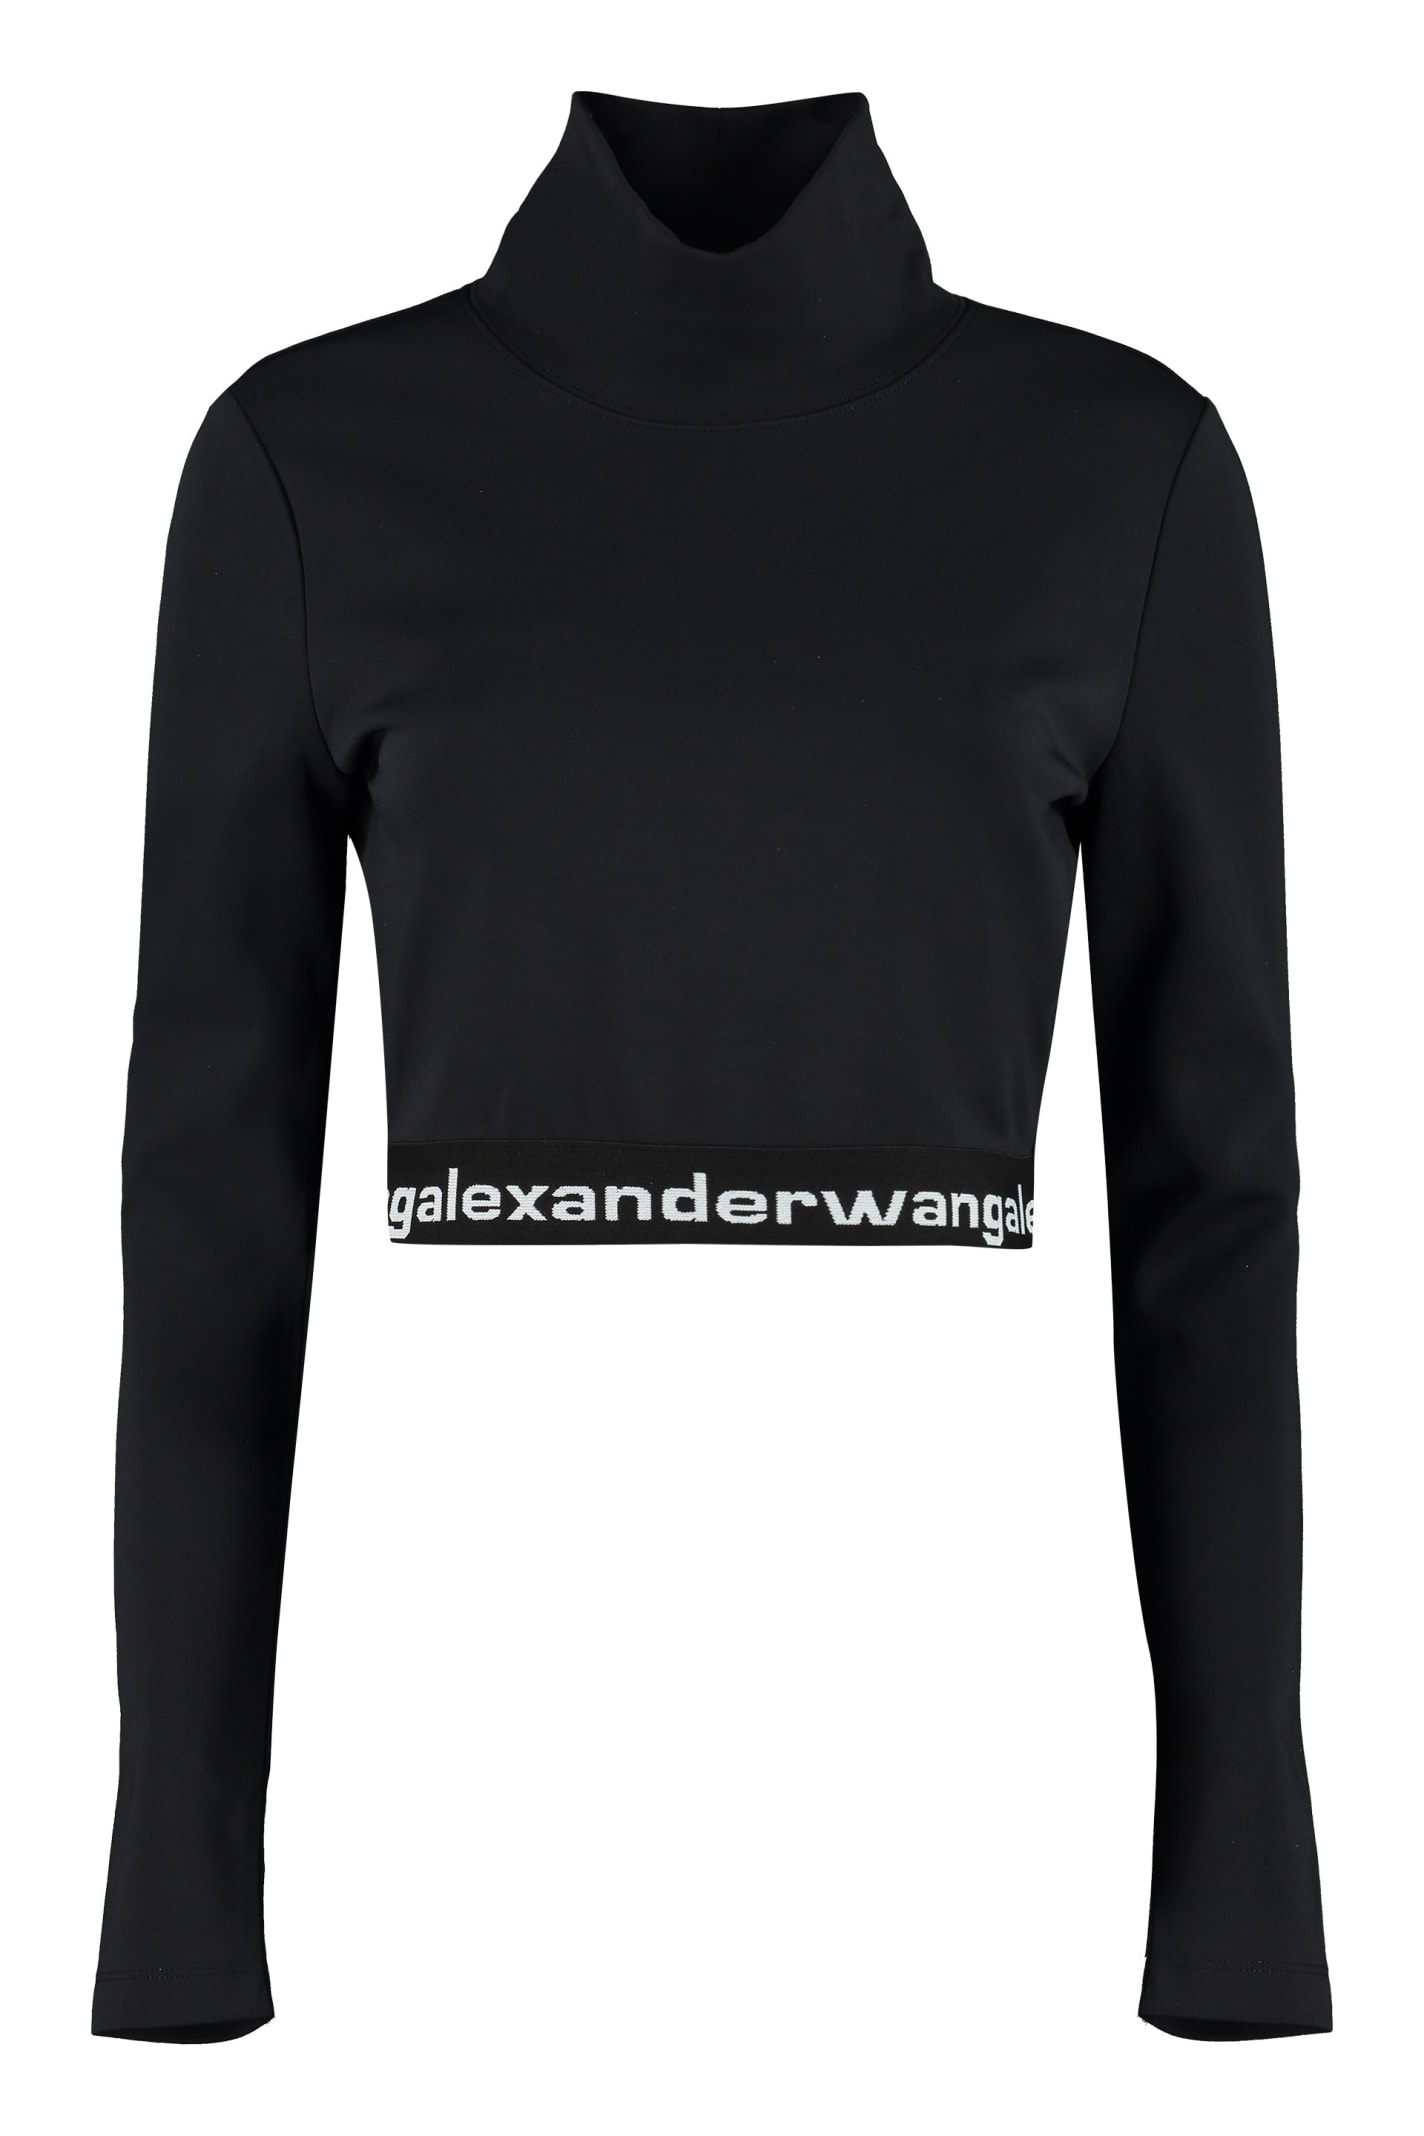 Alexander Wang Long Sleeve Crop Top